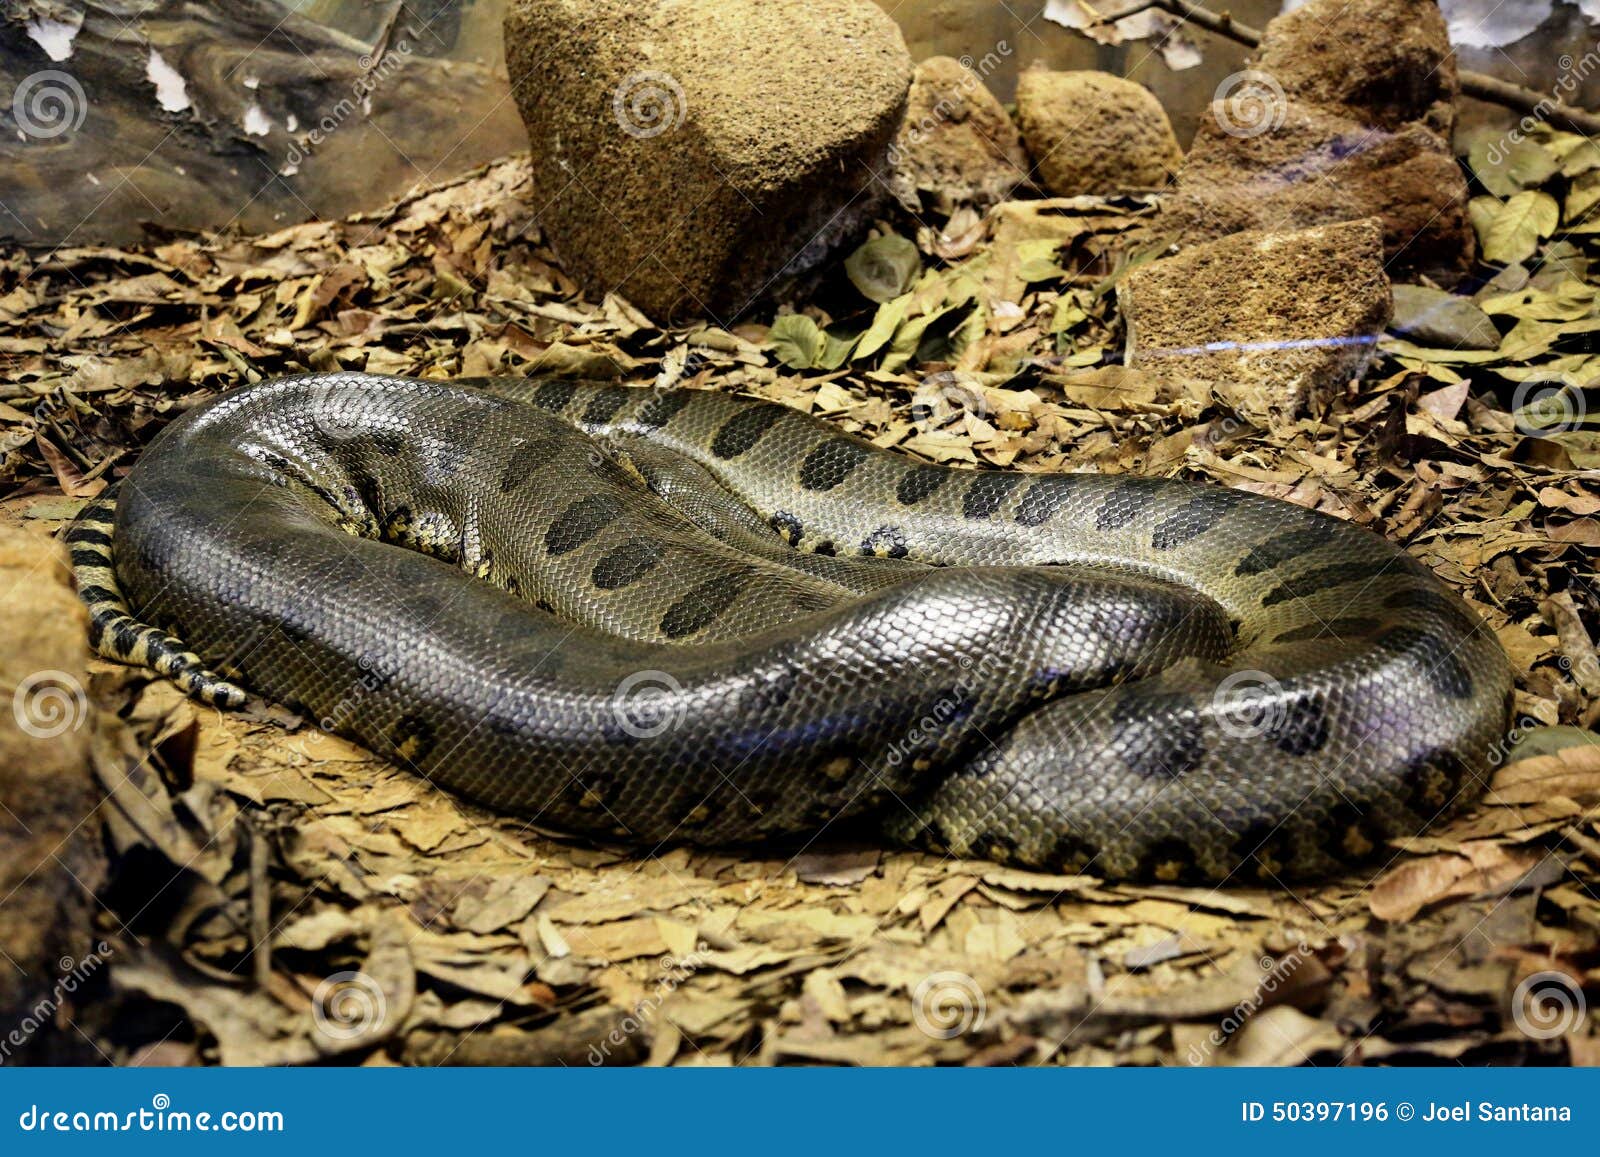 photo stock serpent d anaconda lov image